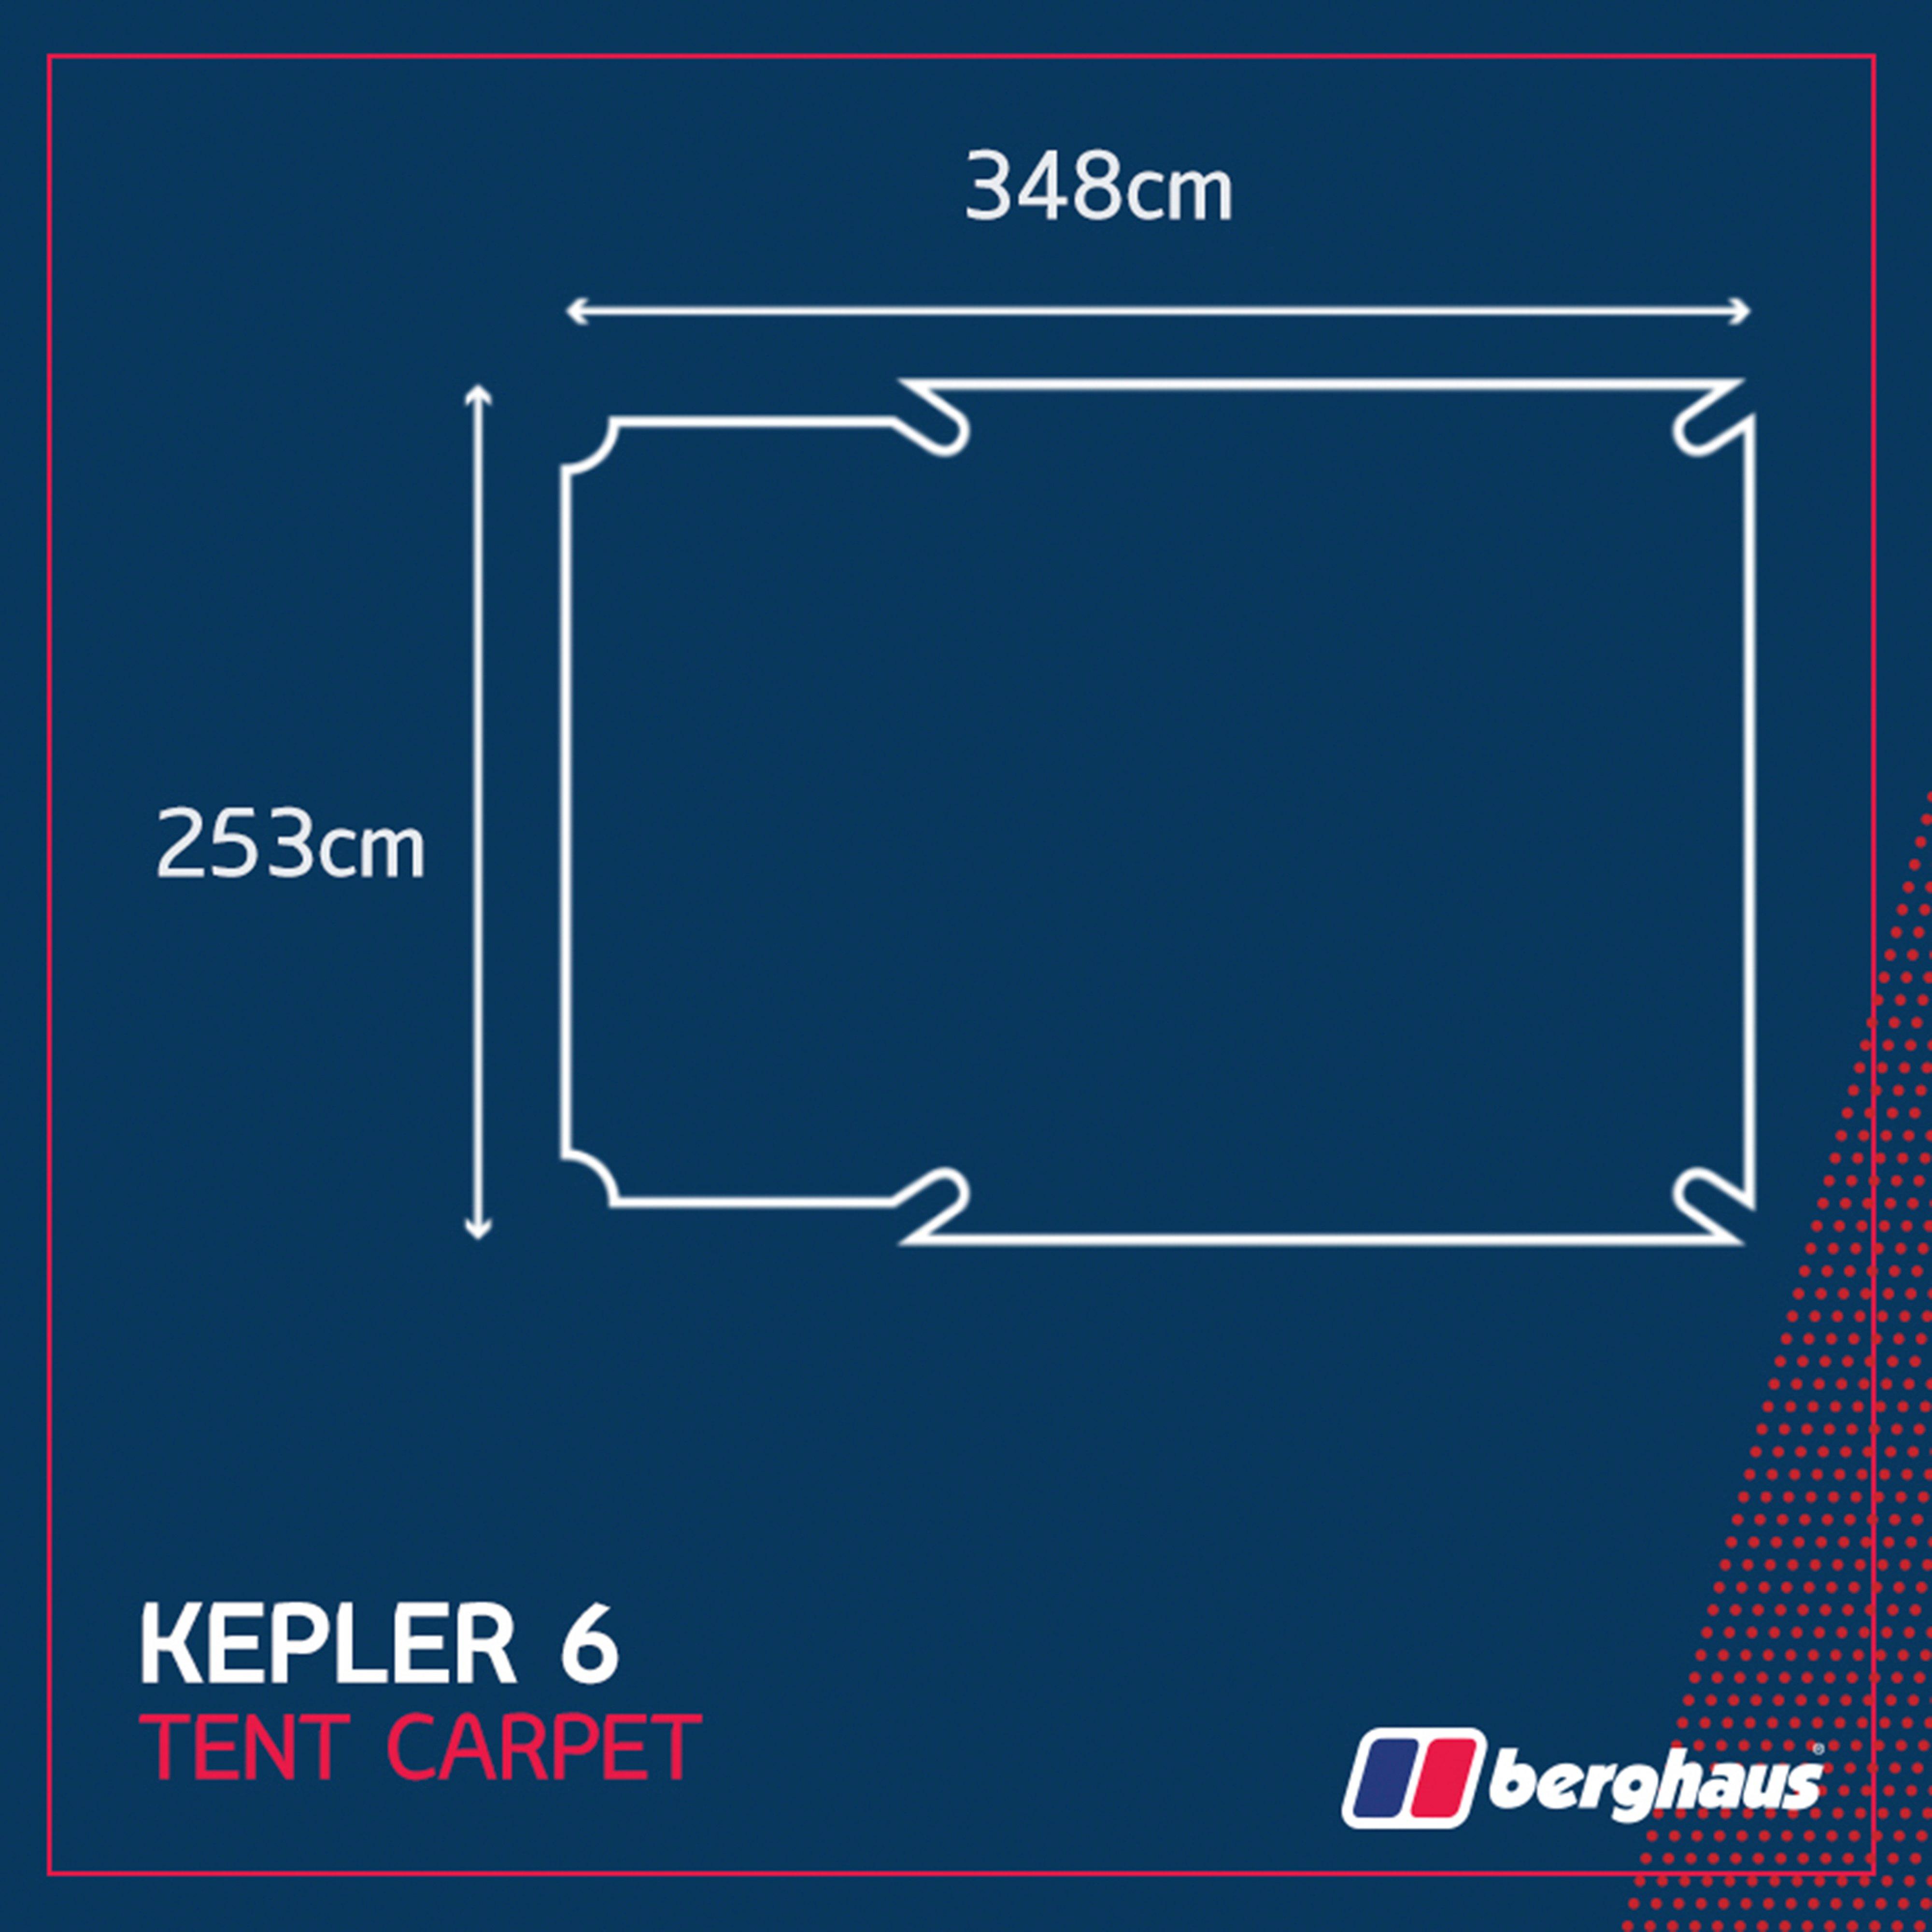 Berghaus Kepler 6 Tent Carpet Review